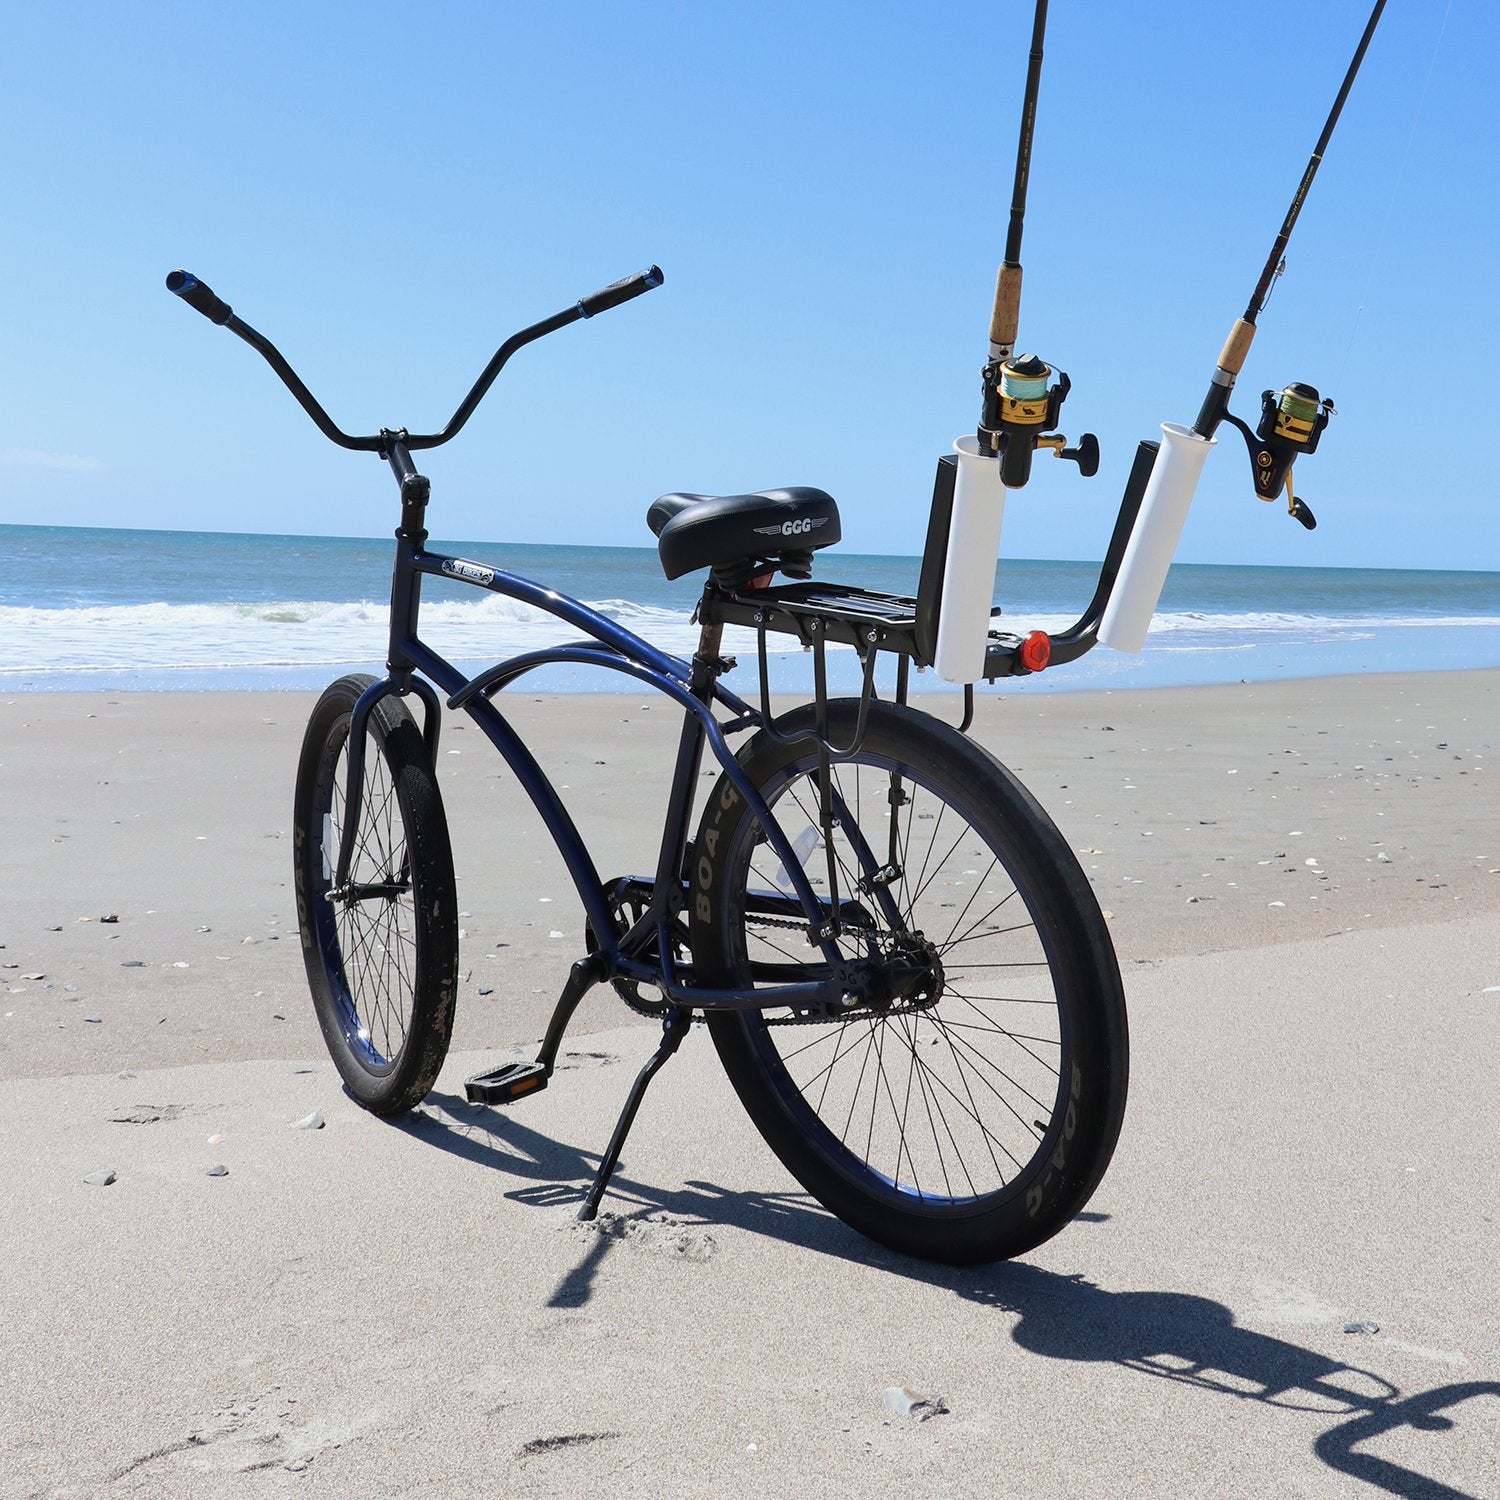 Sea Striker CAL-BRRK Bicycle Rack with Rod Holder